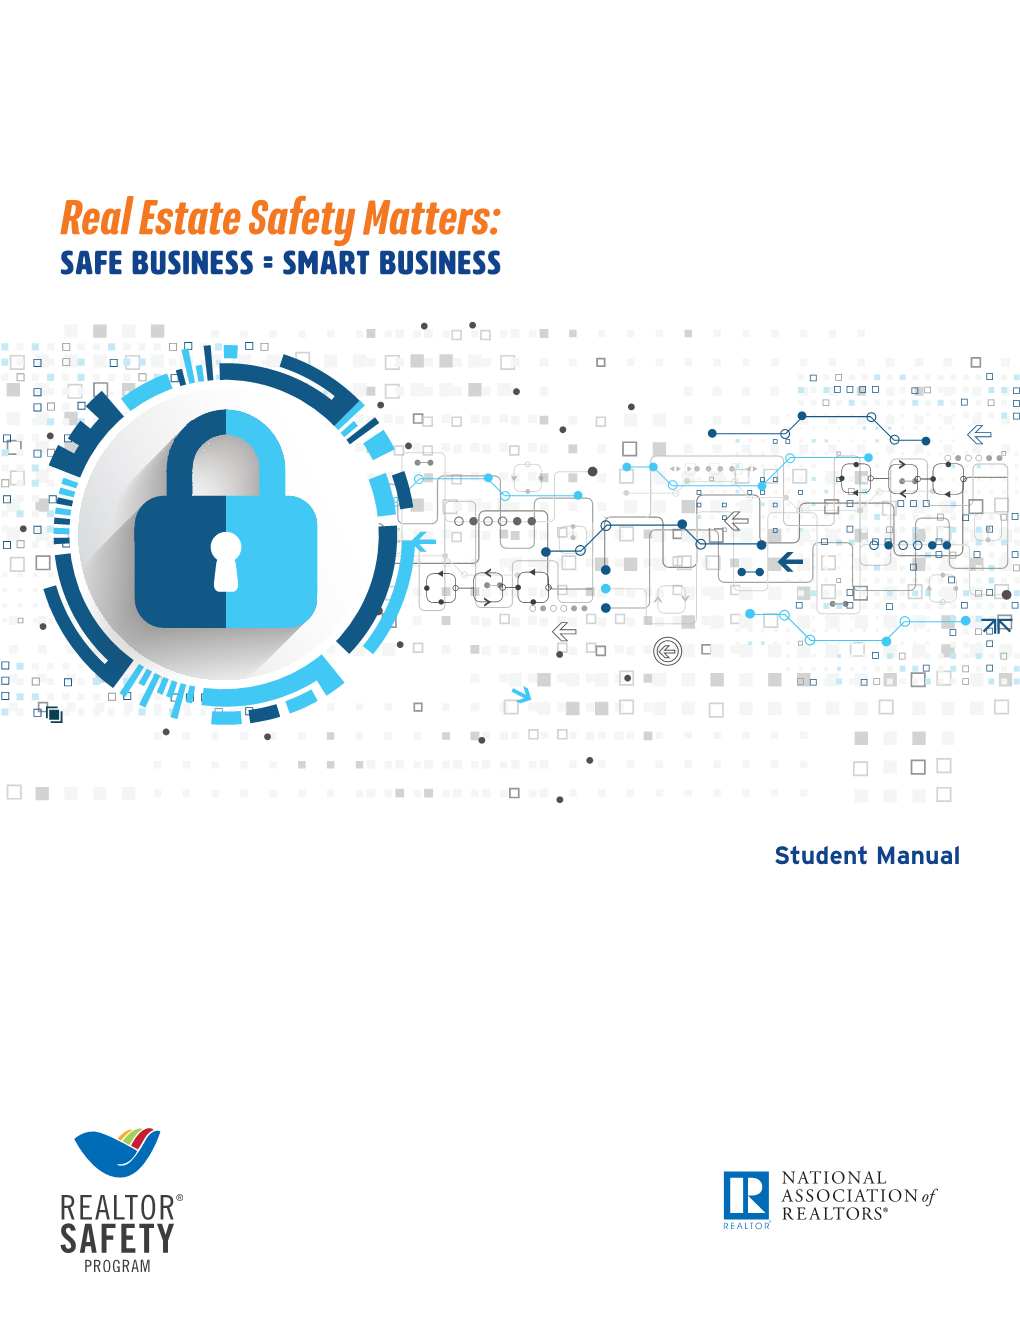 Real Sstate Safey Matters: Safe Business = Smart